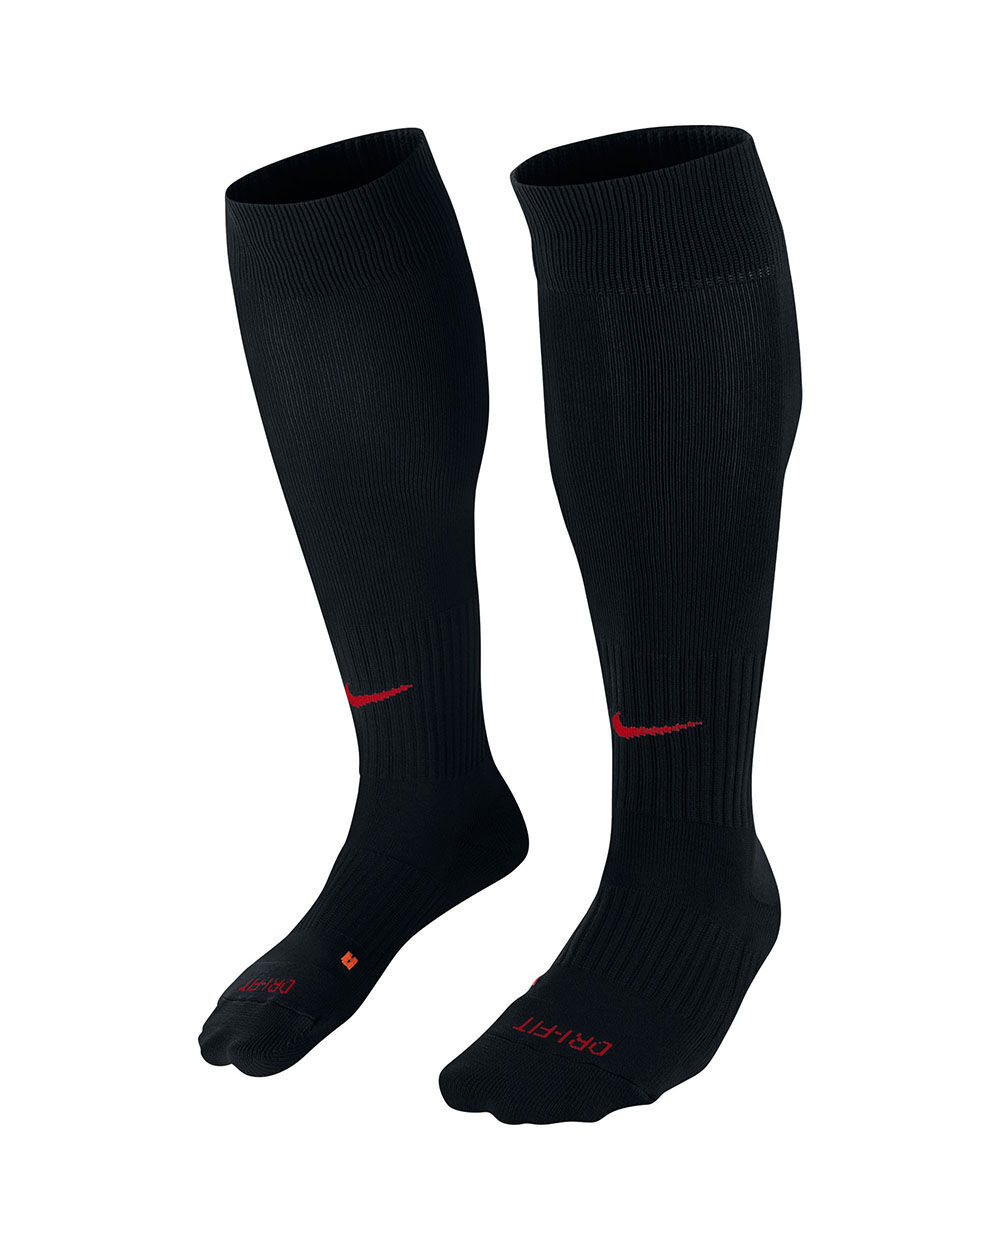 Calcetines Nike Classic II - Tallas 42 a 46 - SX5728-012 - Negro y Rojo